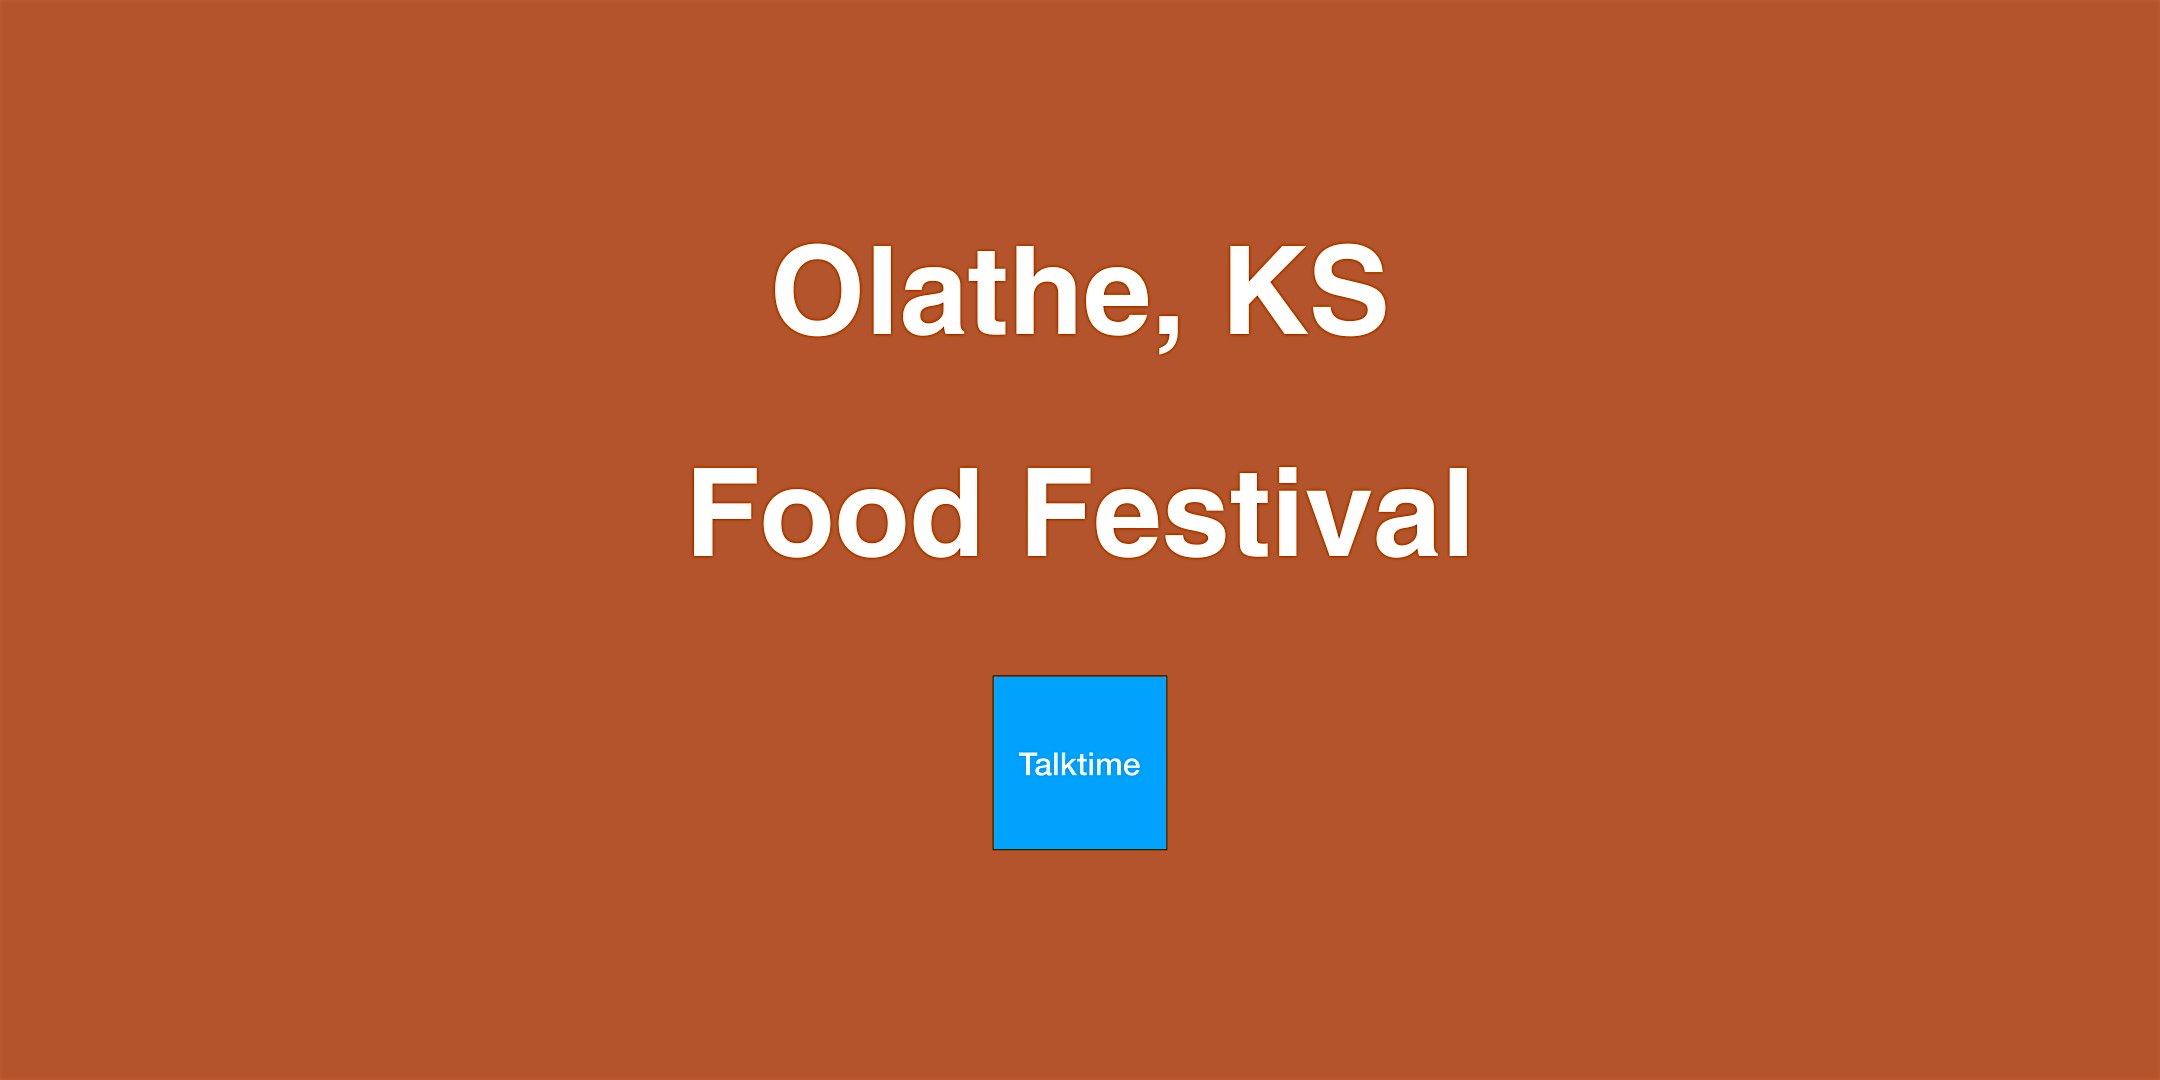 Food Festival - Olathe